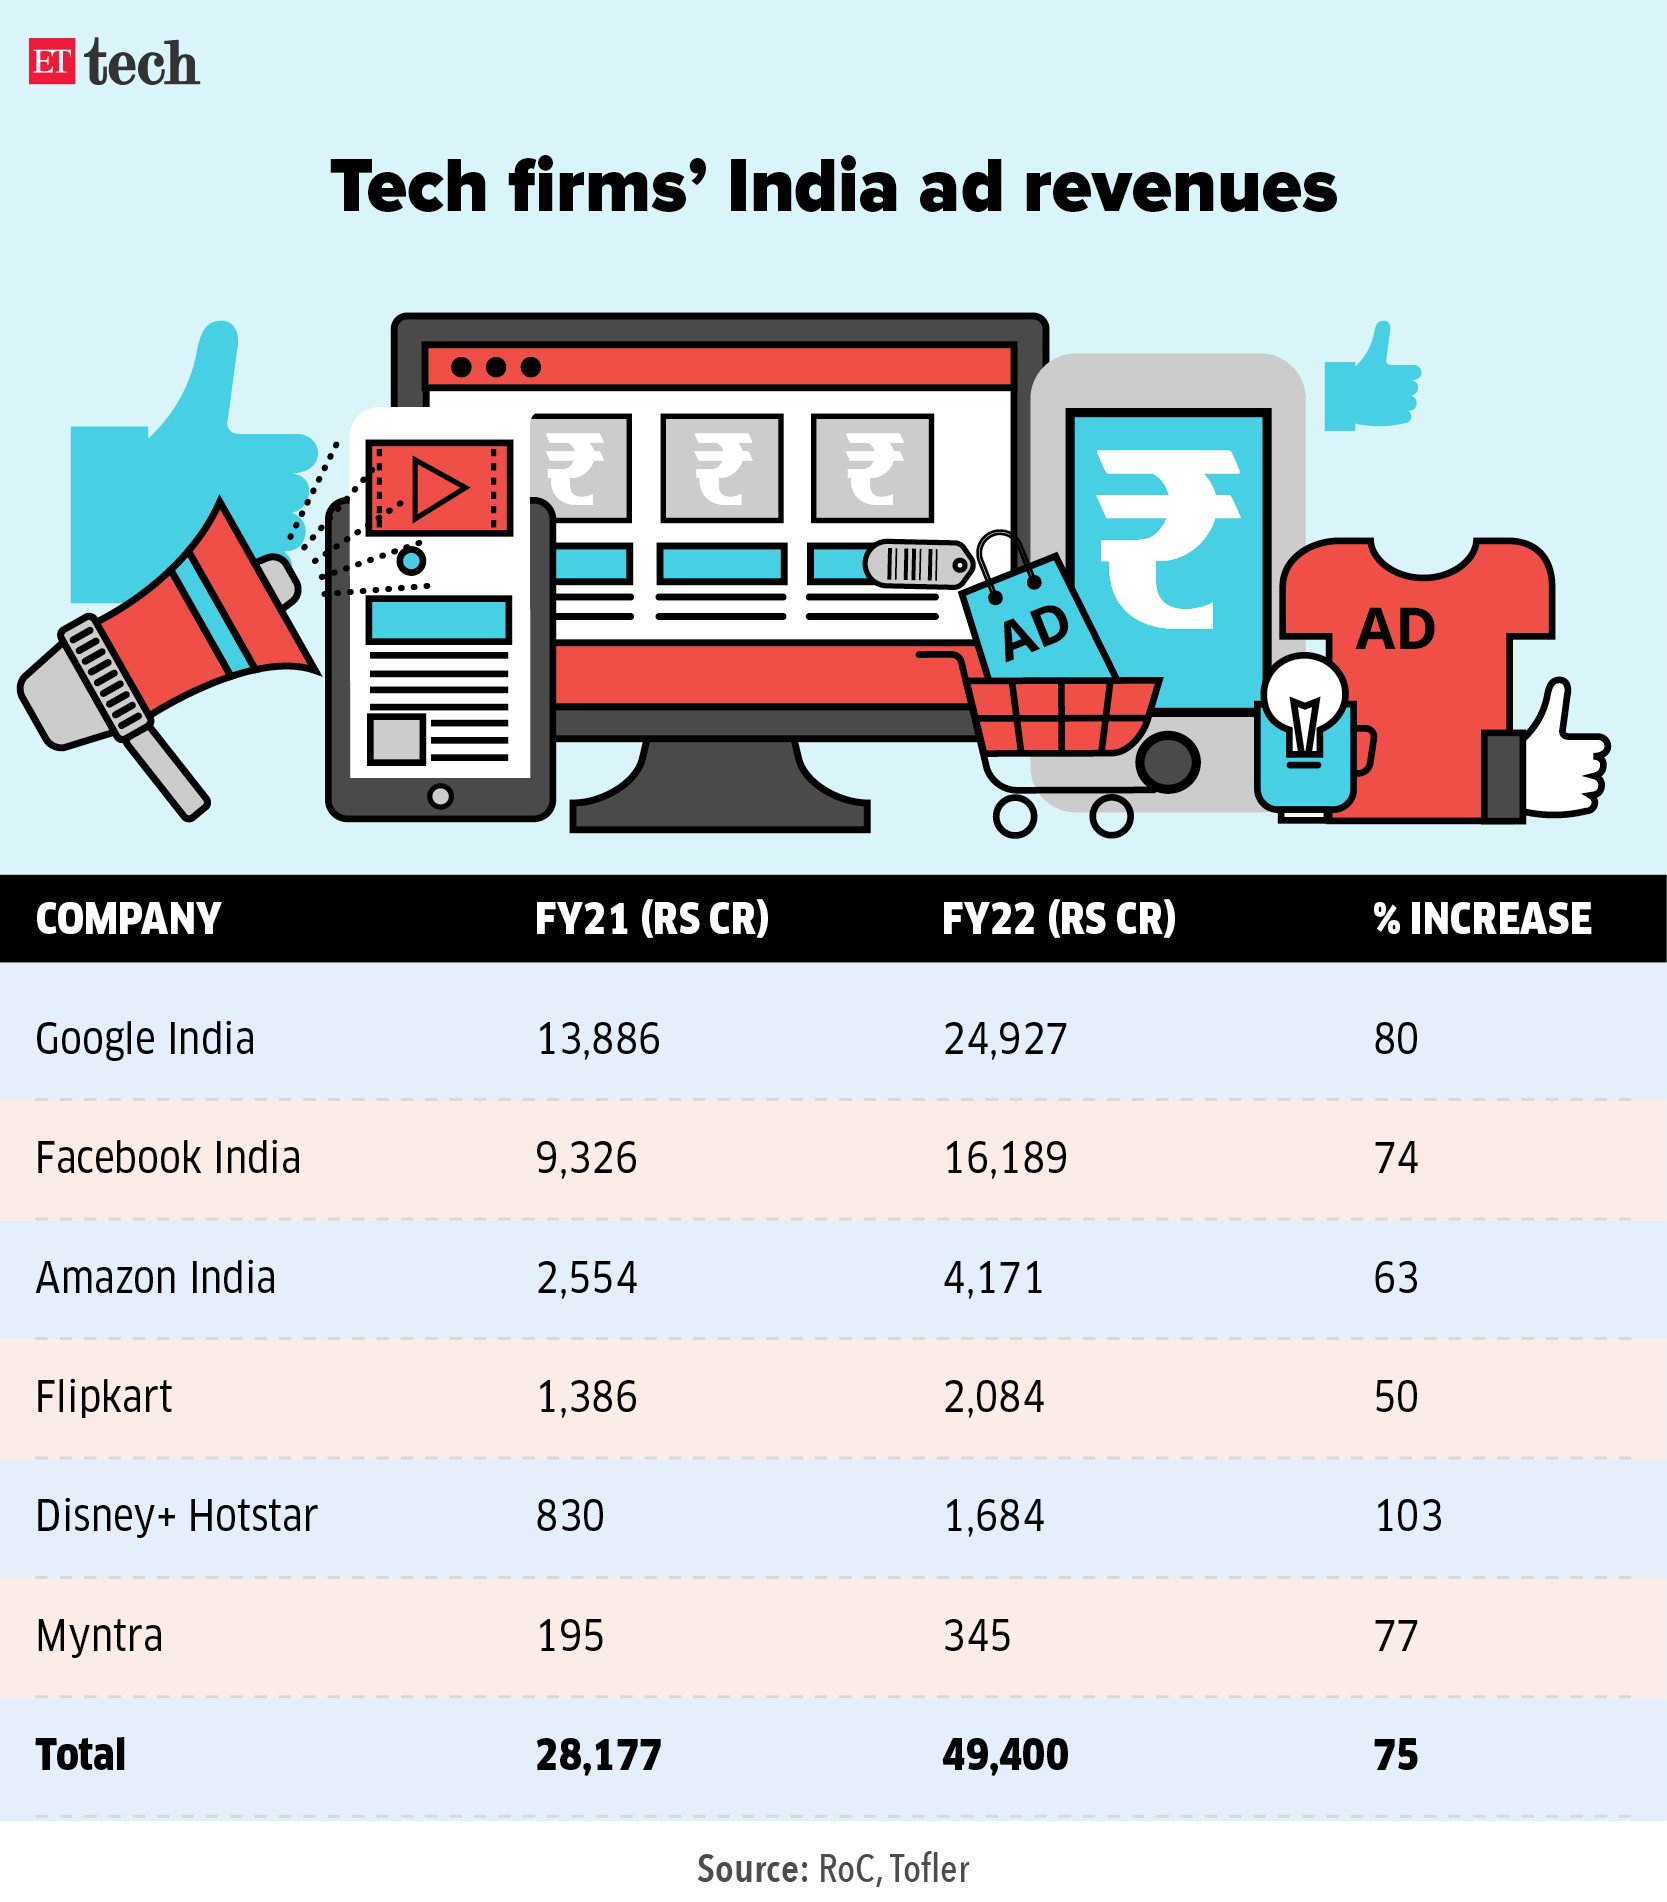 Tech firms ad revenue